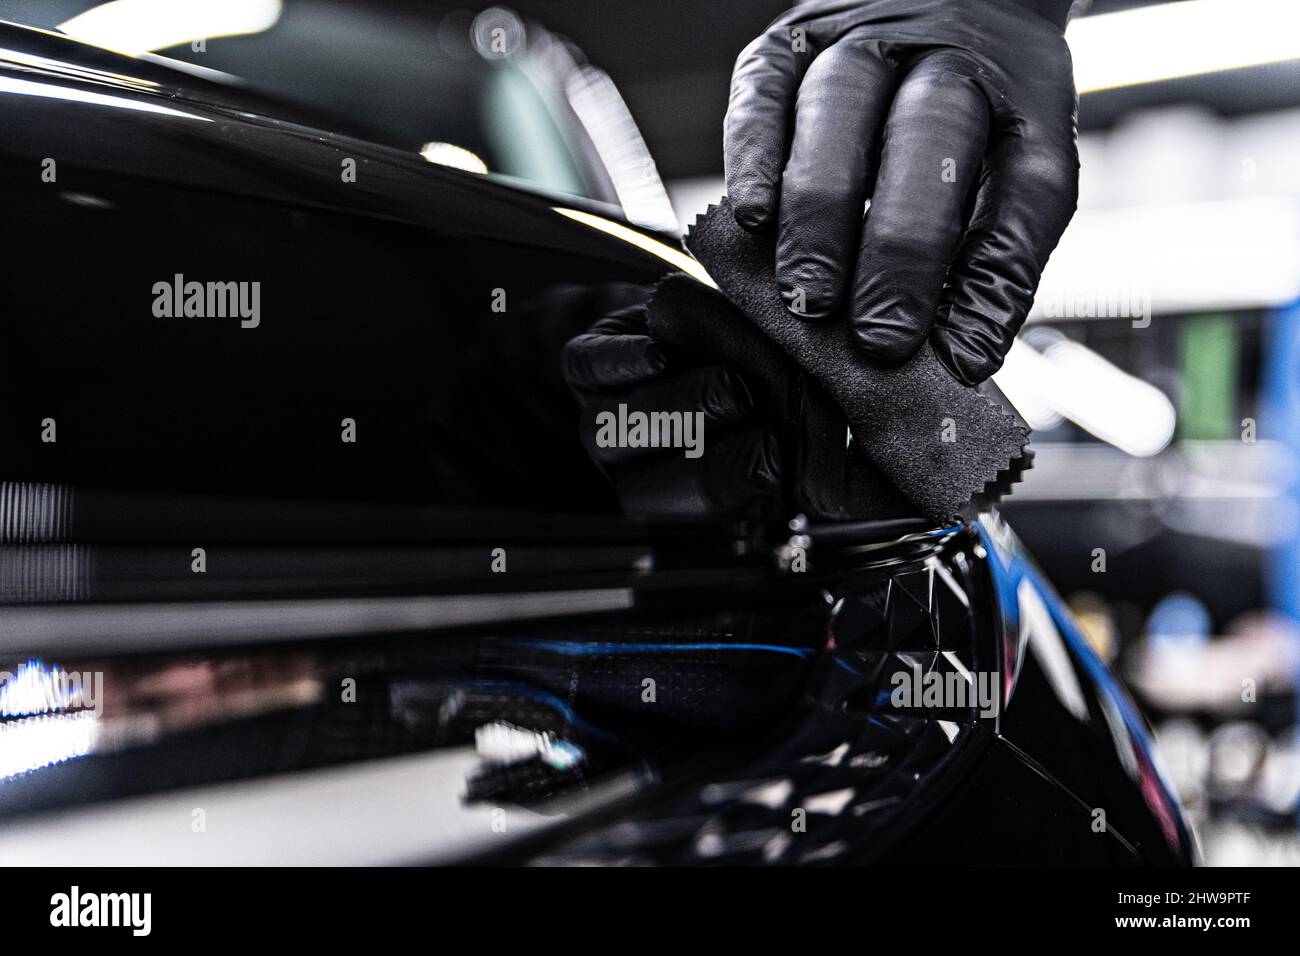 Car detailing studio specialist applying ceramic coating on black car. Stock Photo